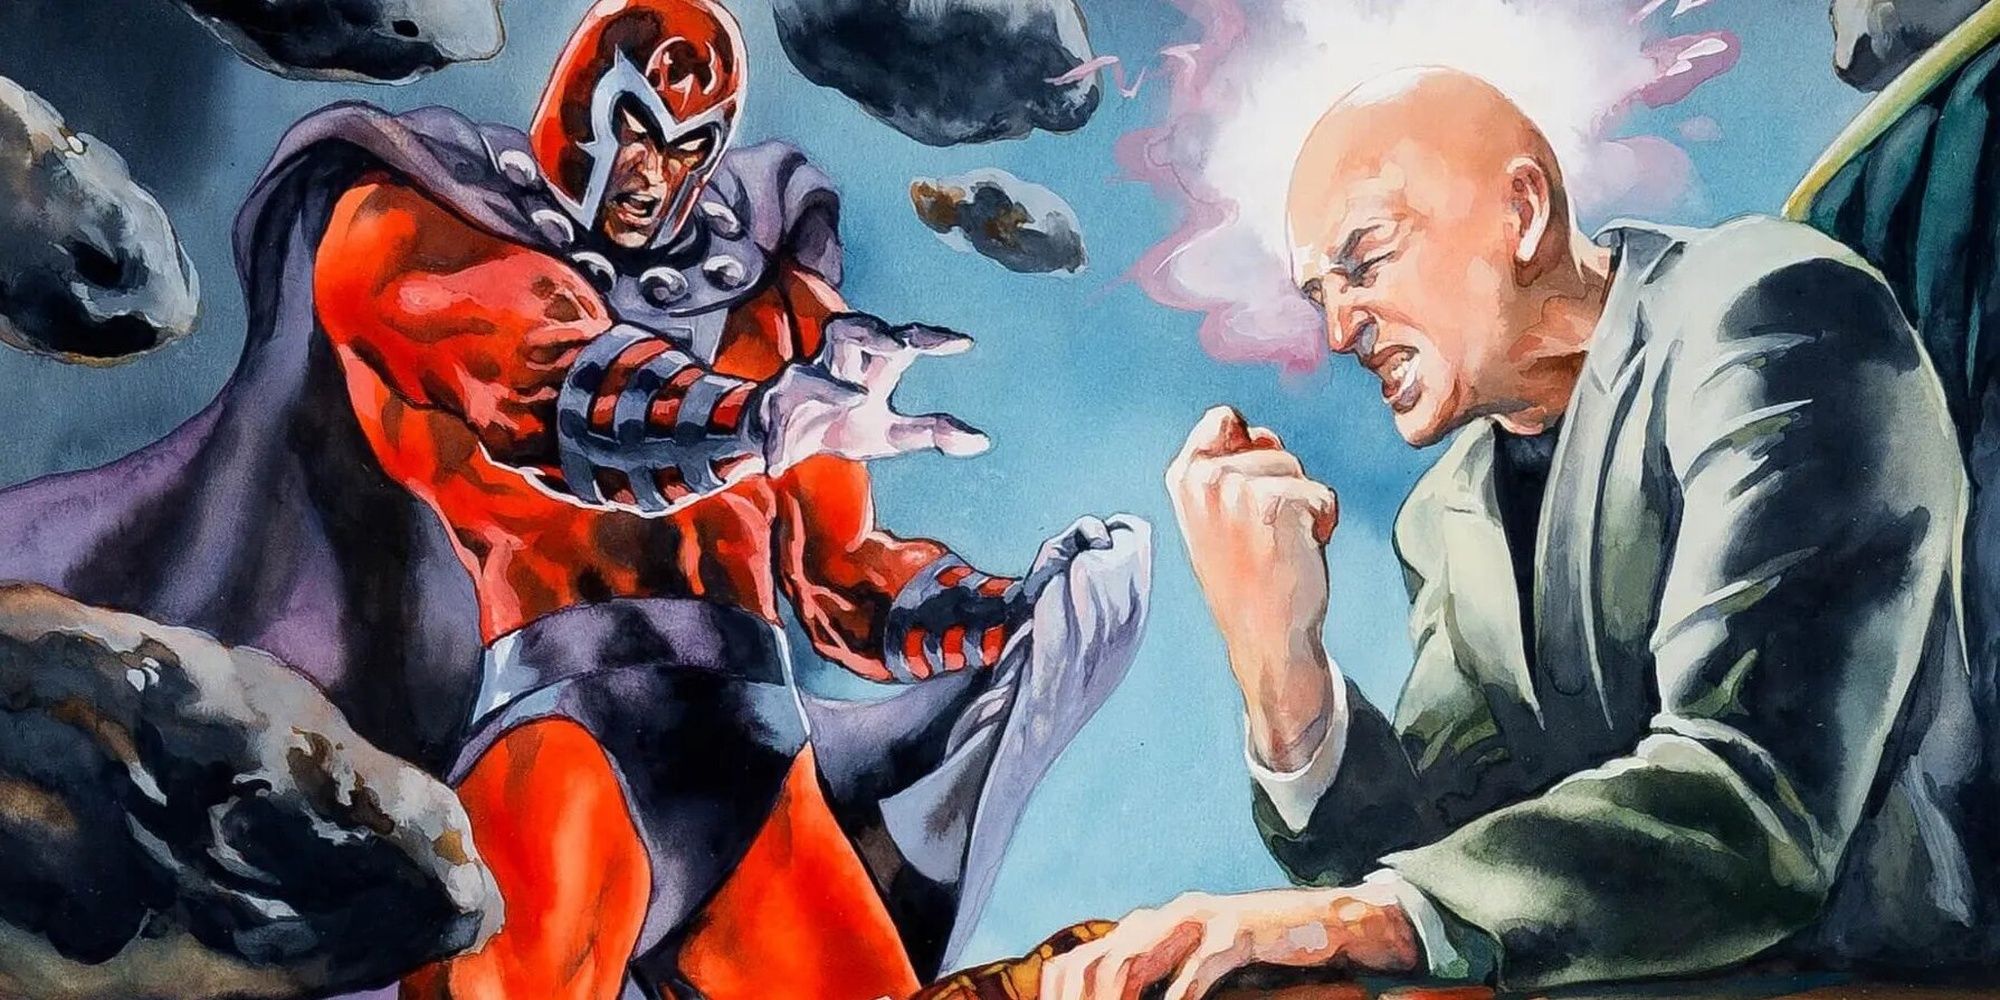 Professor X vs Magneto